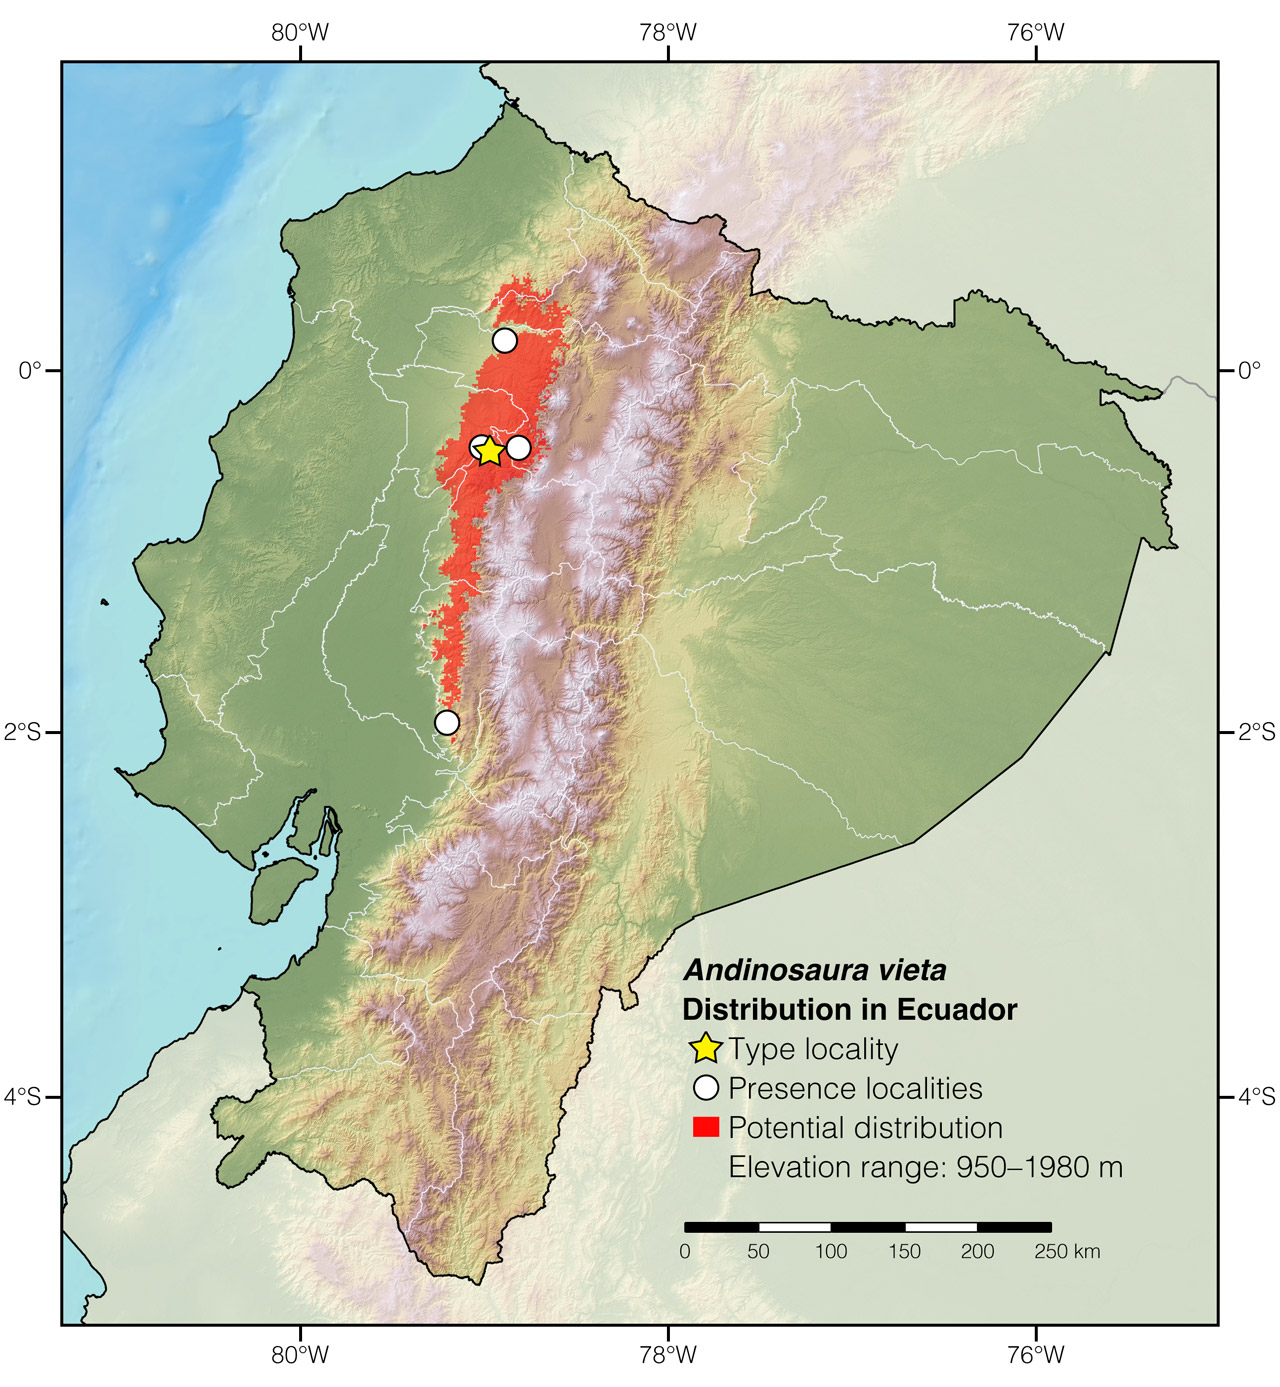 Distribution of Andinosaura vieta in Ecuador